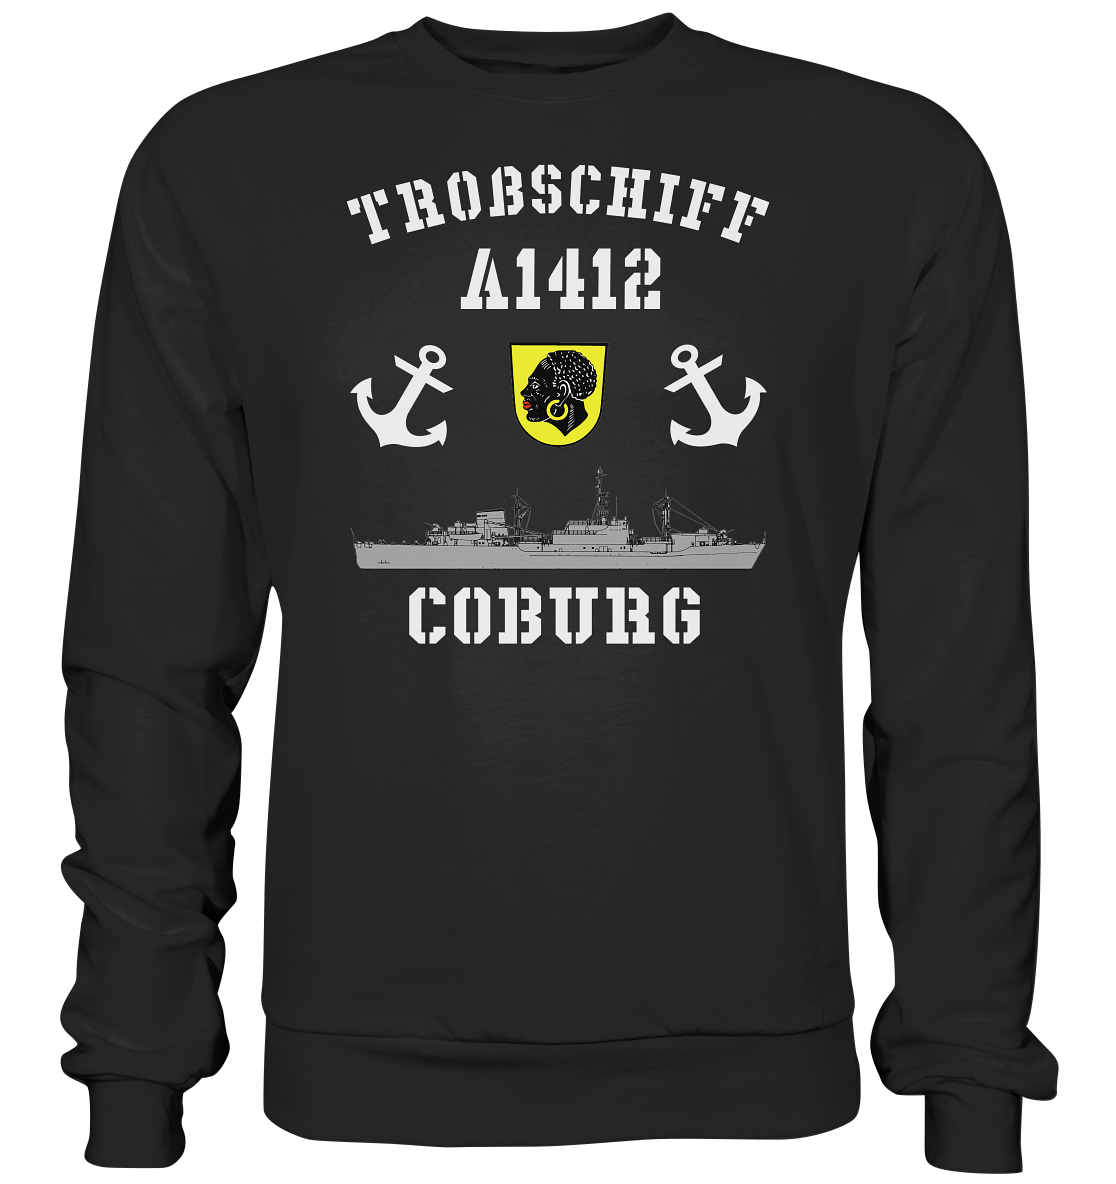 Troßschiff A1412 COBURG - Premium Sweatshirt